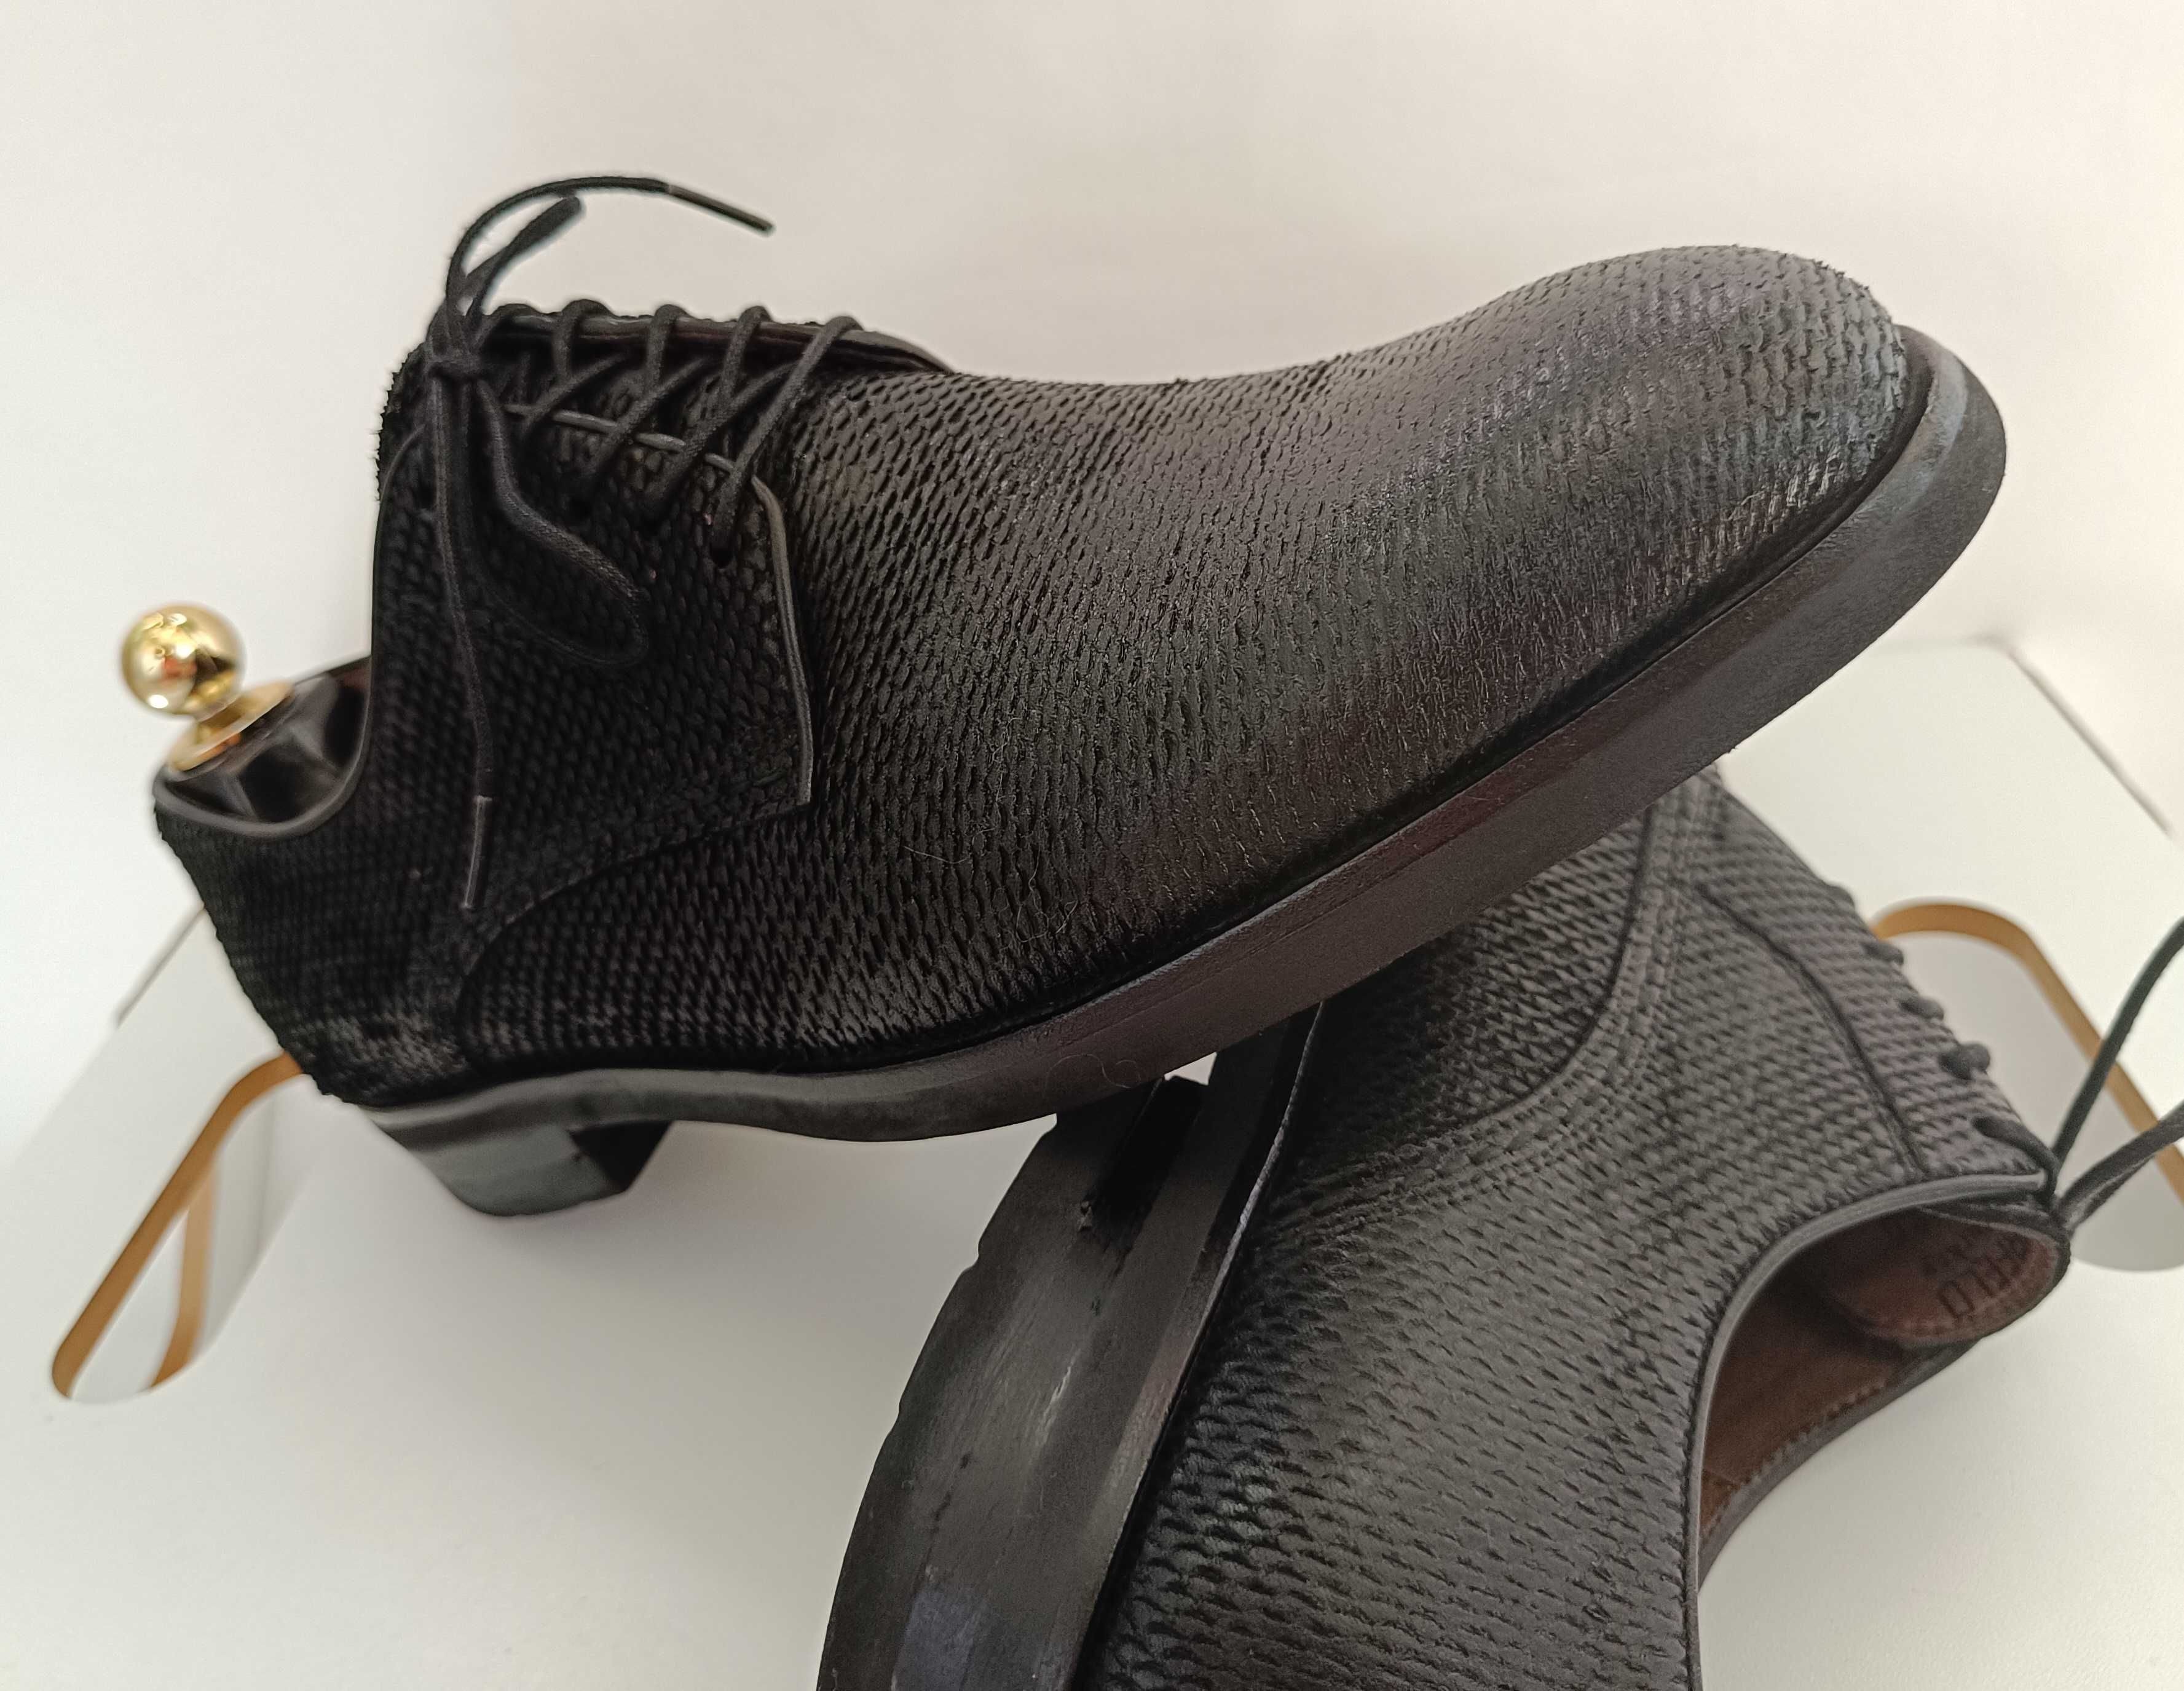 Pantofi derby 40 40.5 de lux lucrati Lagerfeld piele naturala nappa